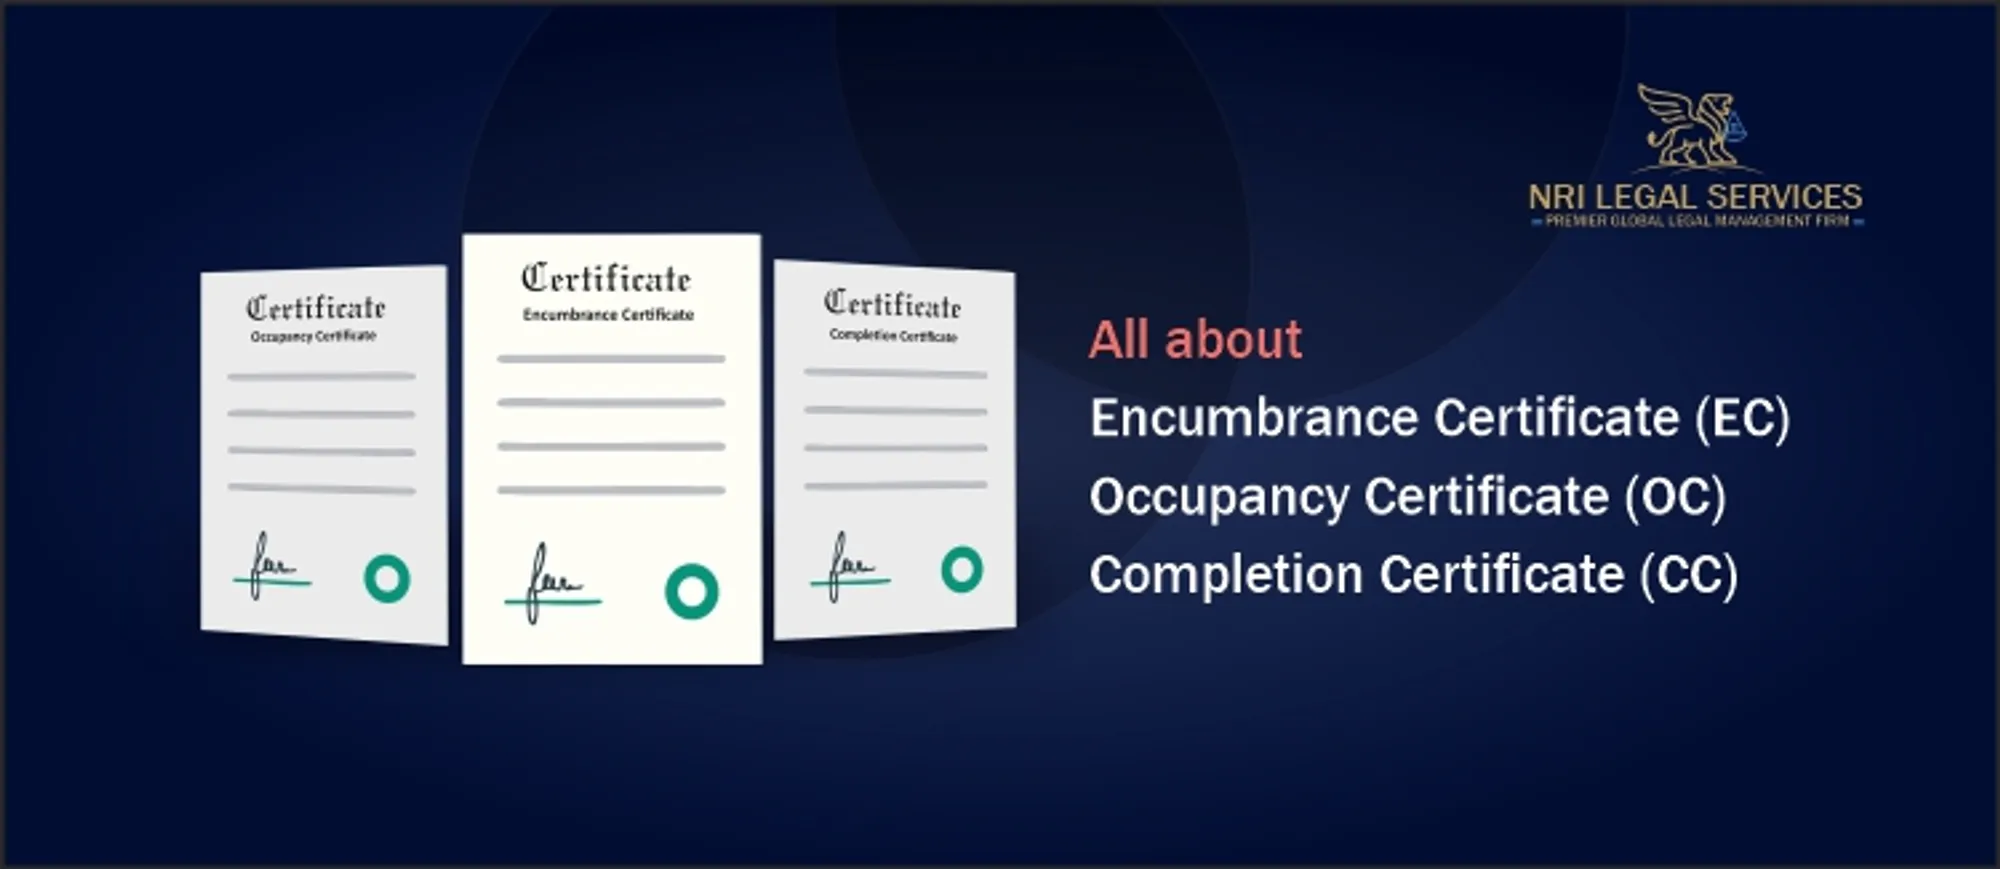 Encumbrance Certificate (EC), Occupancy Certificate (OC) and Completion Certificate (CC)